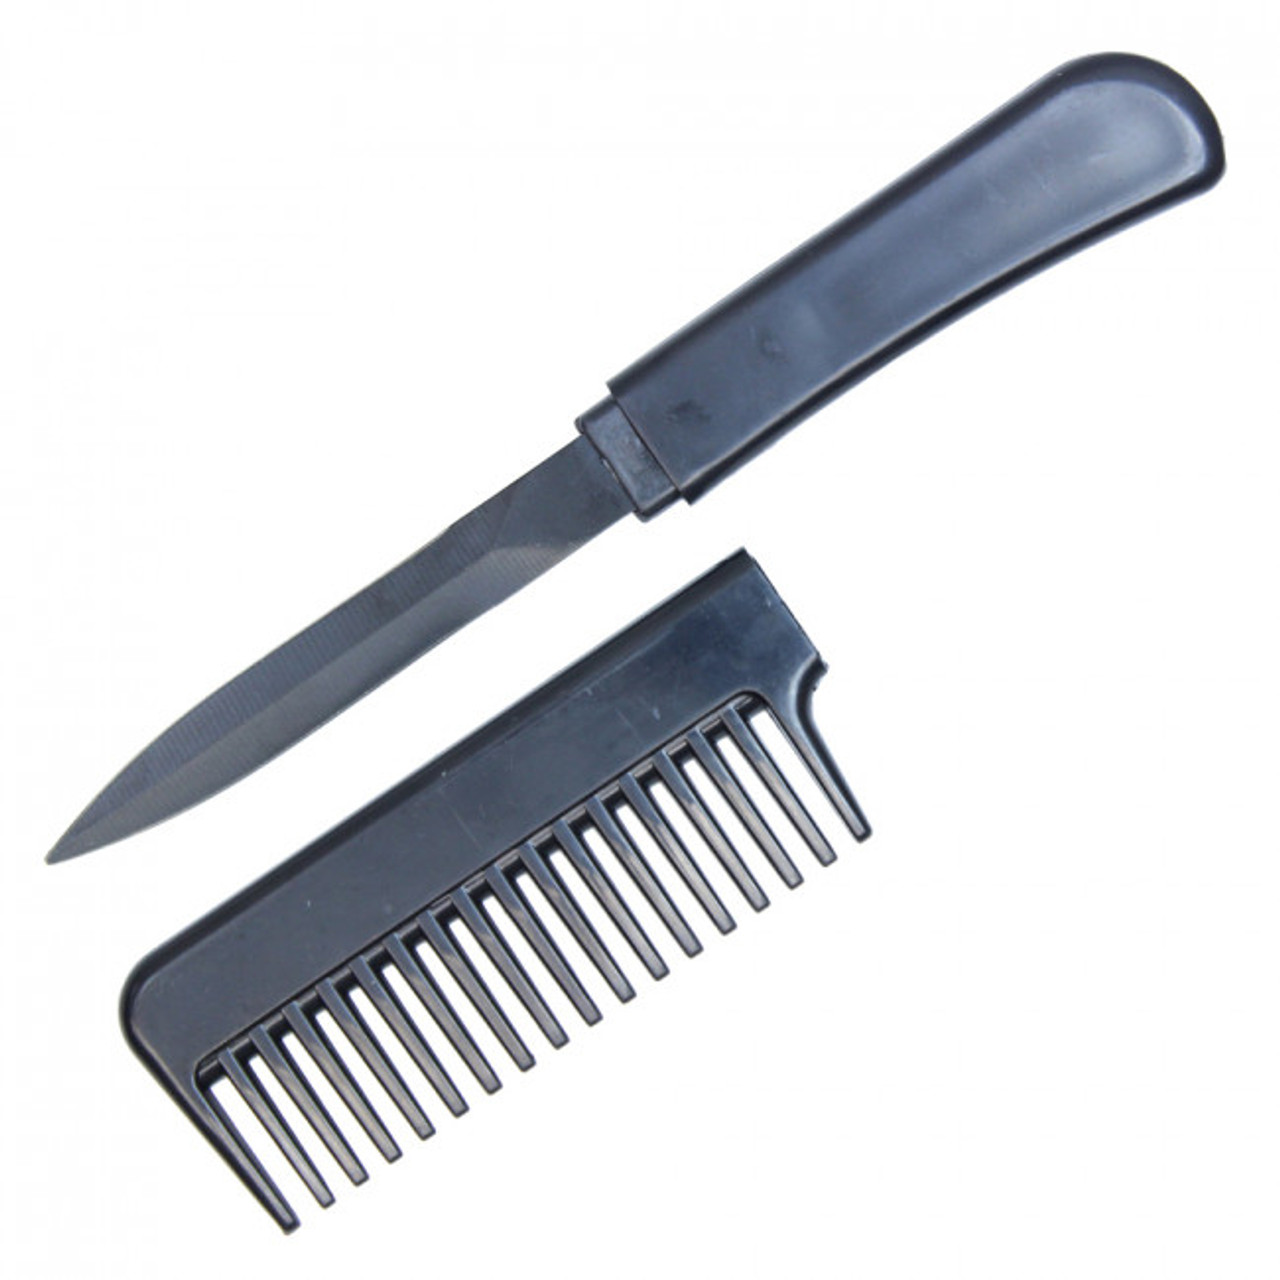 Comb Knife - J&L Self Defense Products